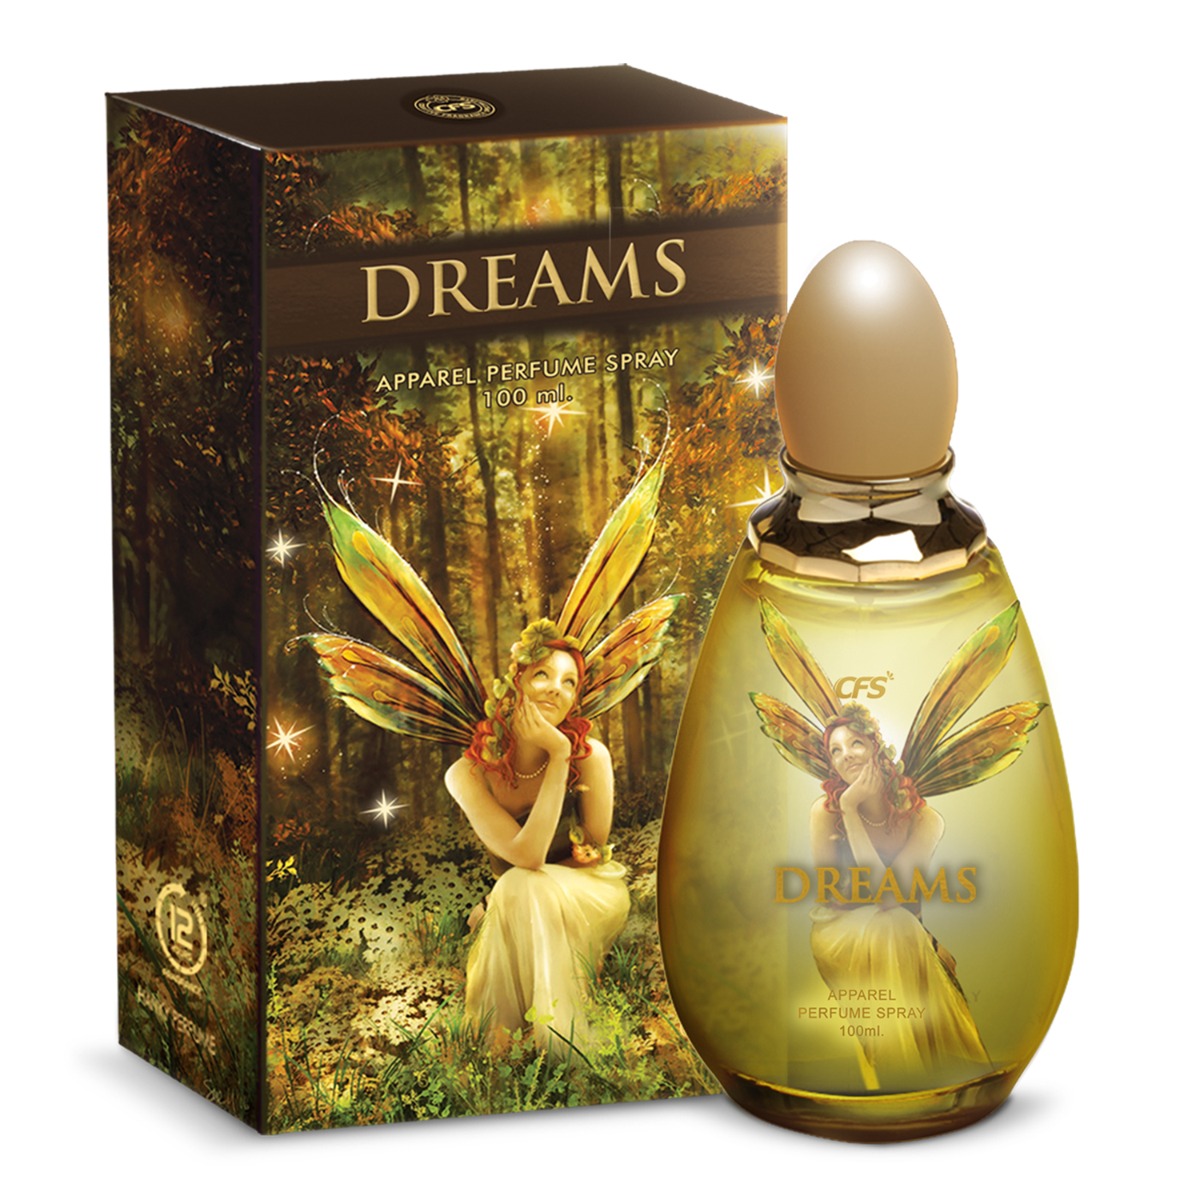 CFS Dreams Long Lasting Apparel Perfume Spray, 100ml